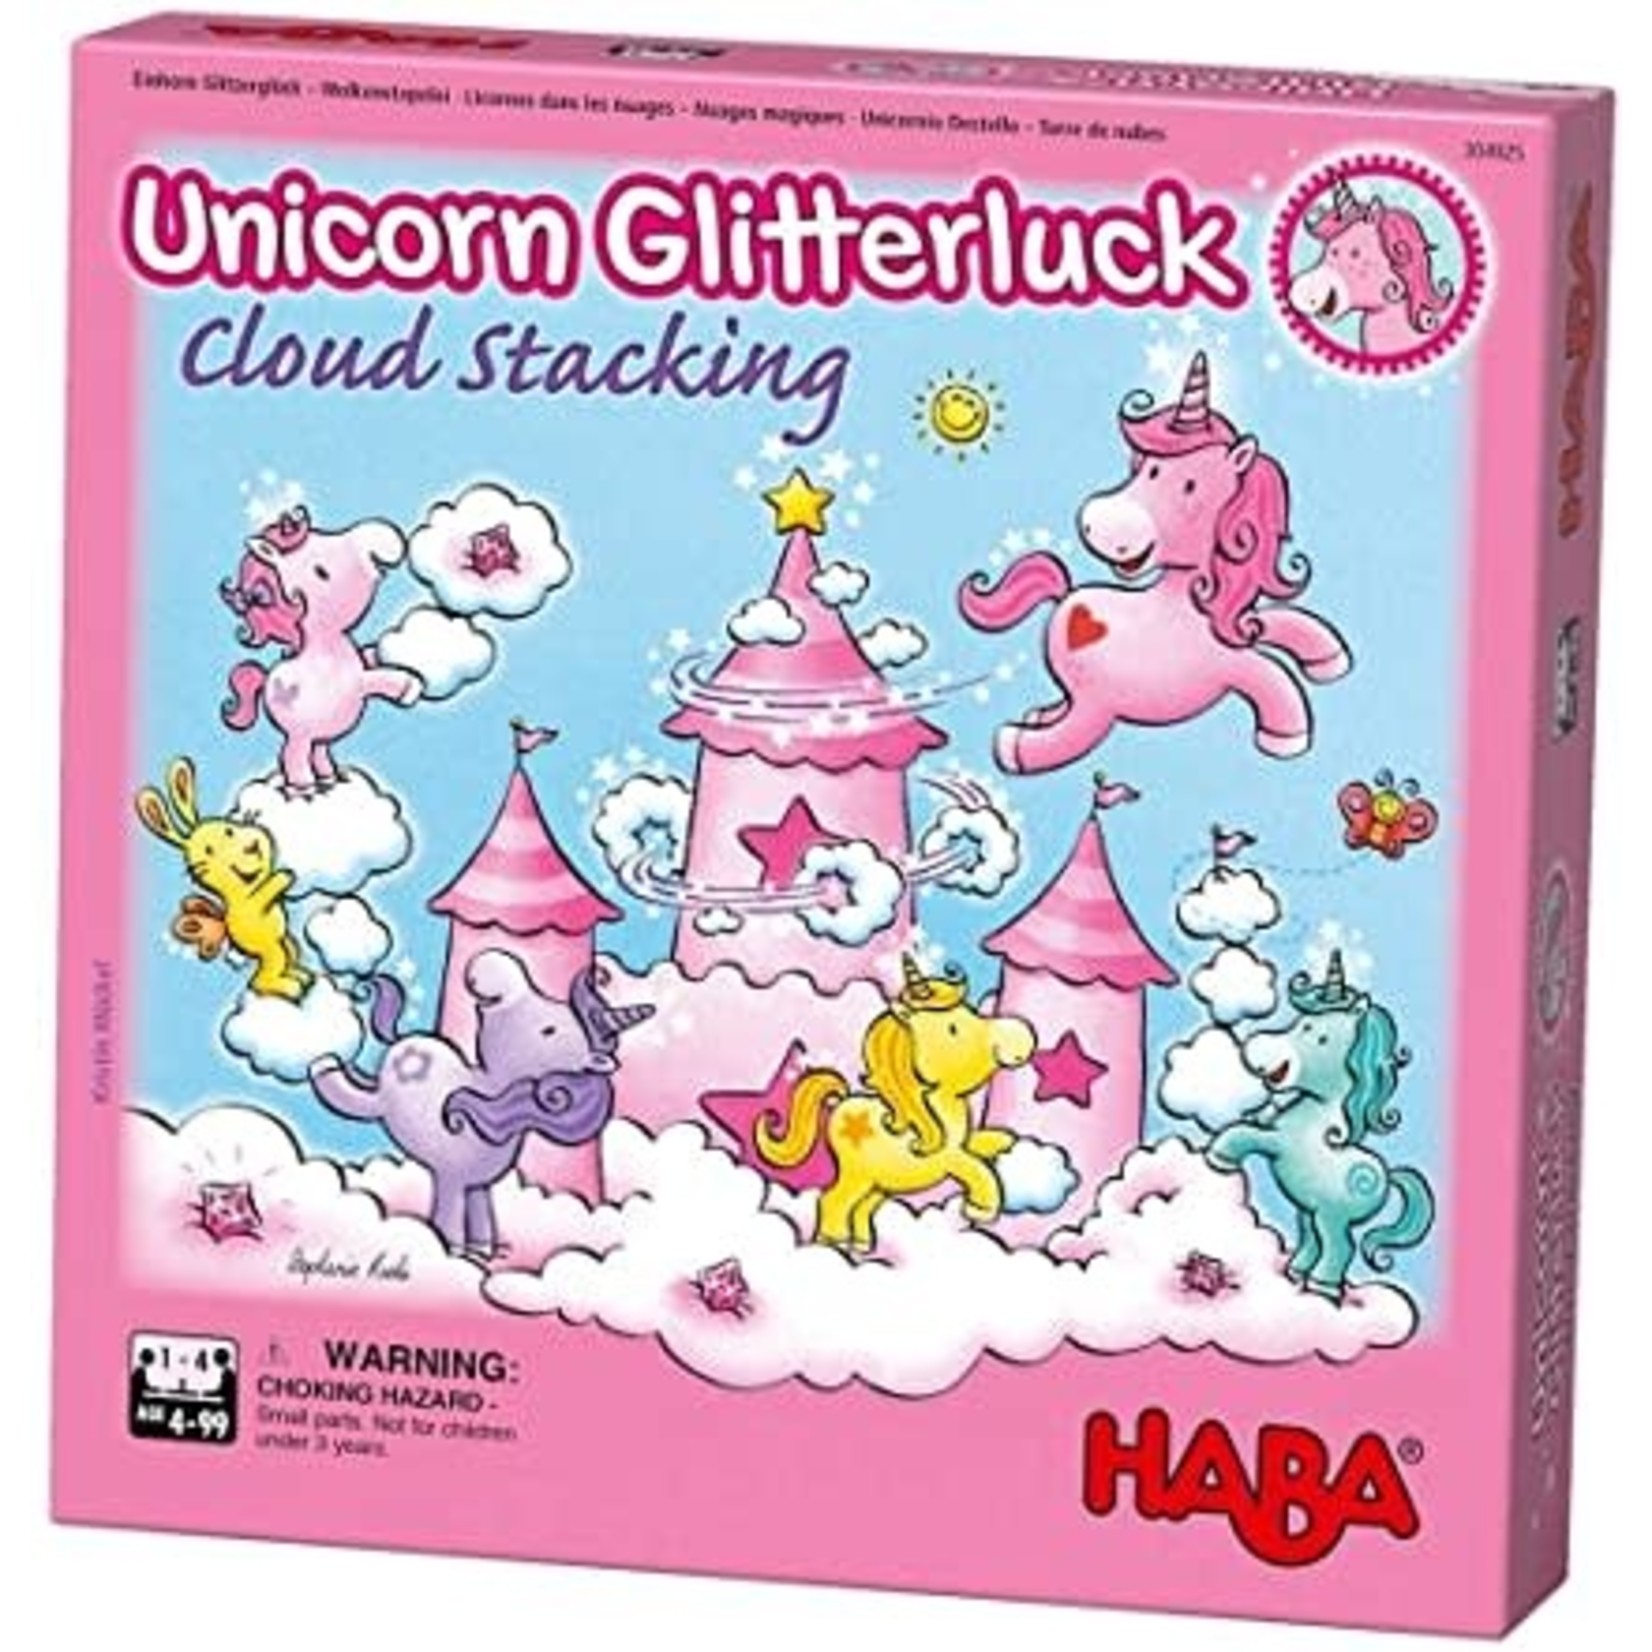 Haba Unicorn Glitterluck: Cloud Stacking